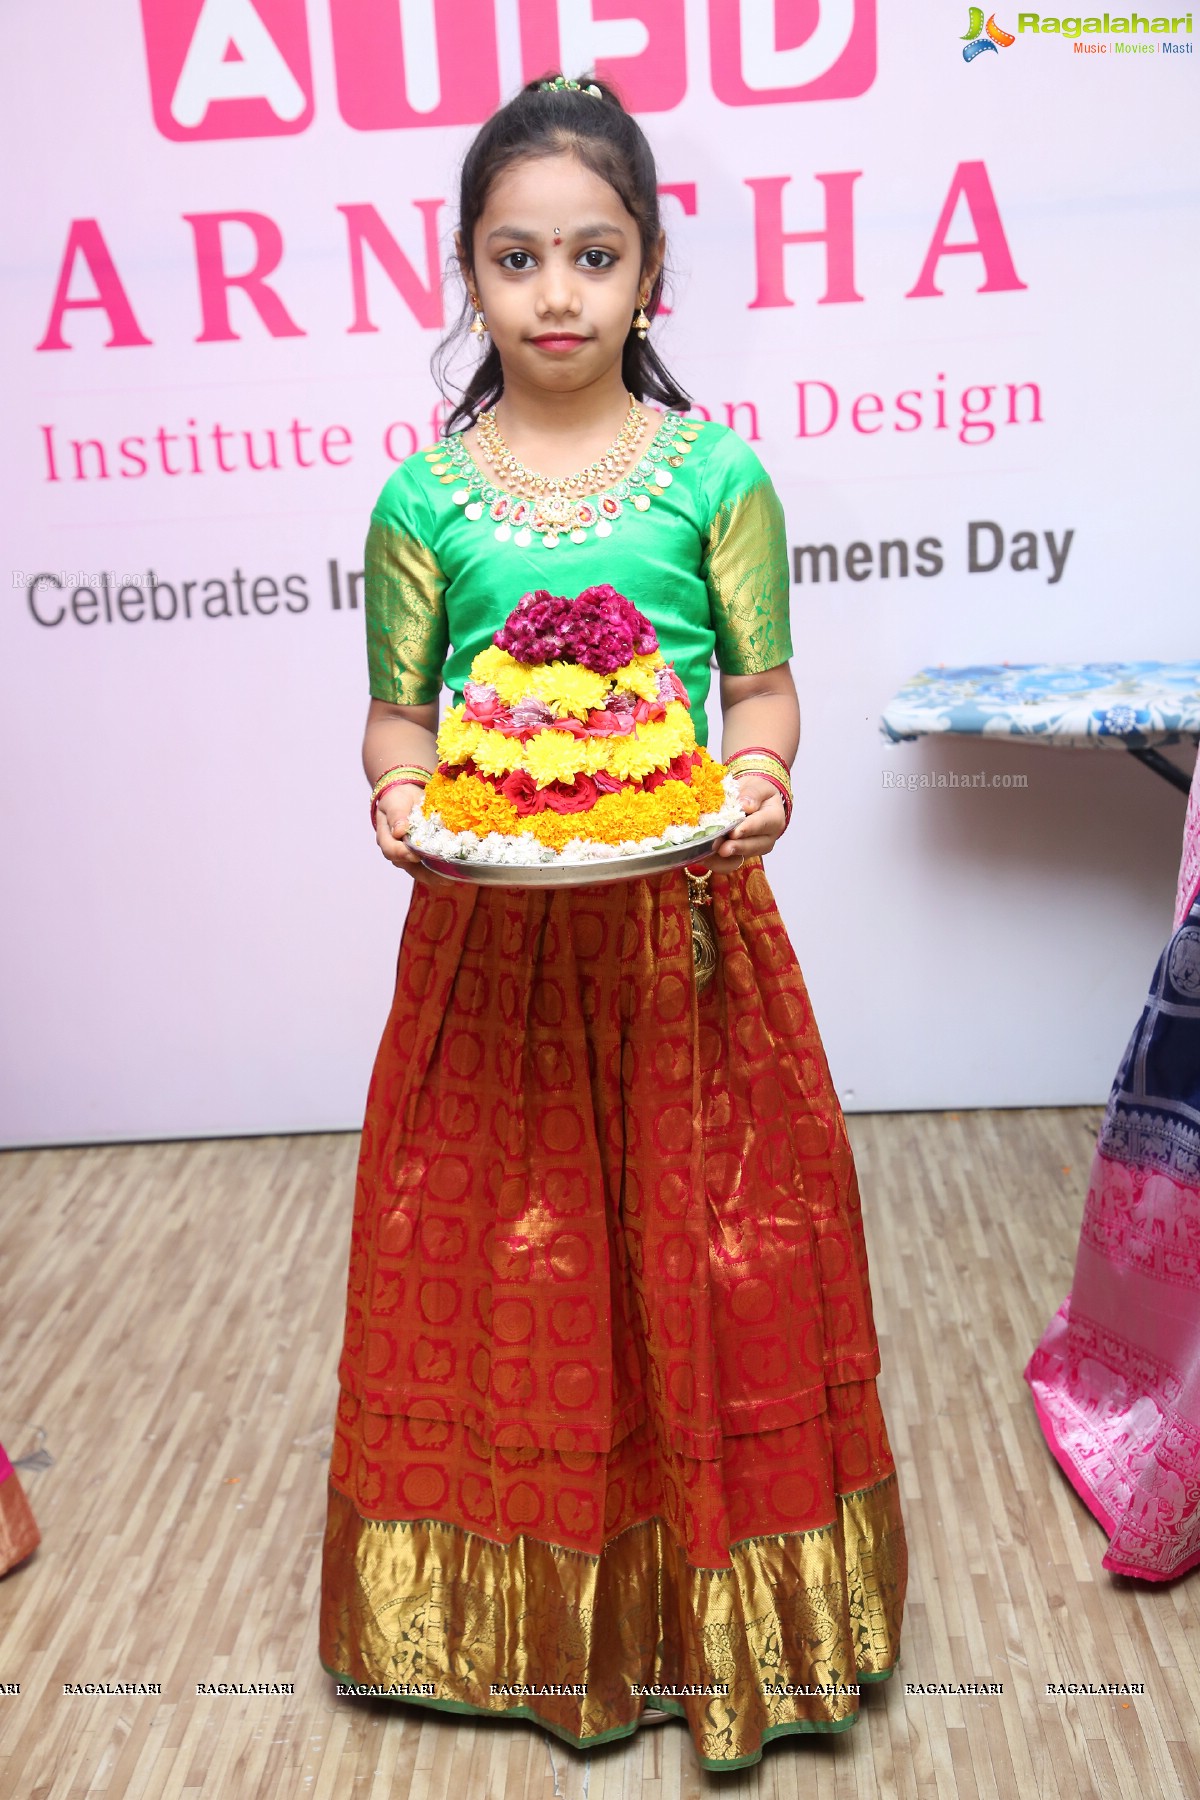 Arnitha Institute of Fashion Design celebrates Batukamma Sambaralu